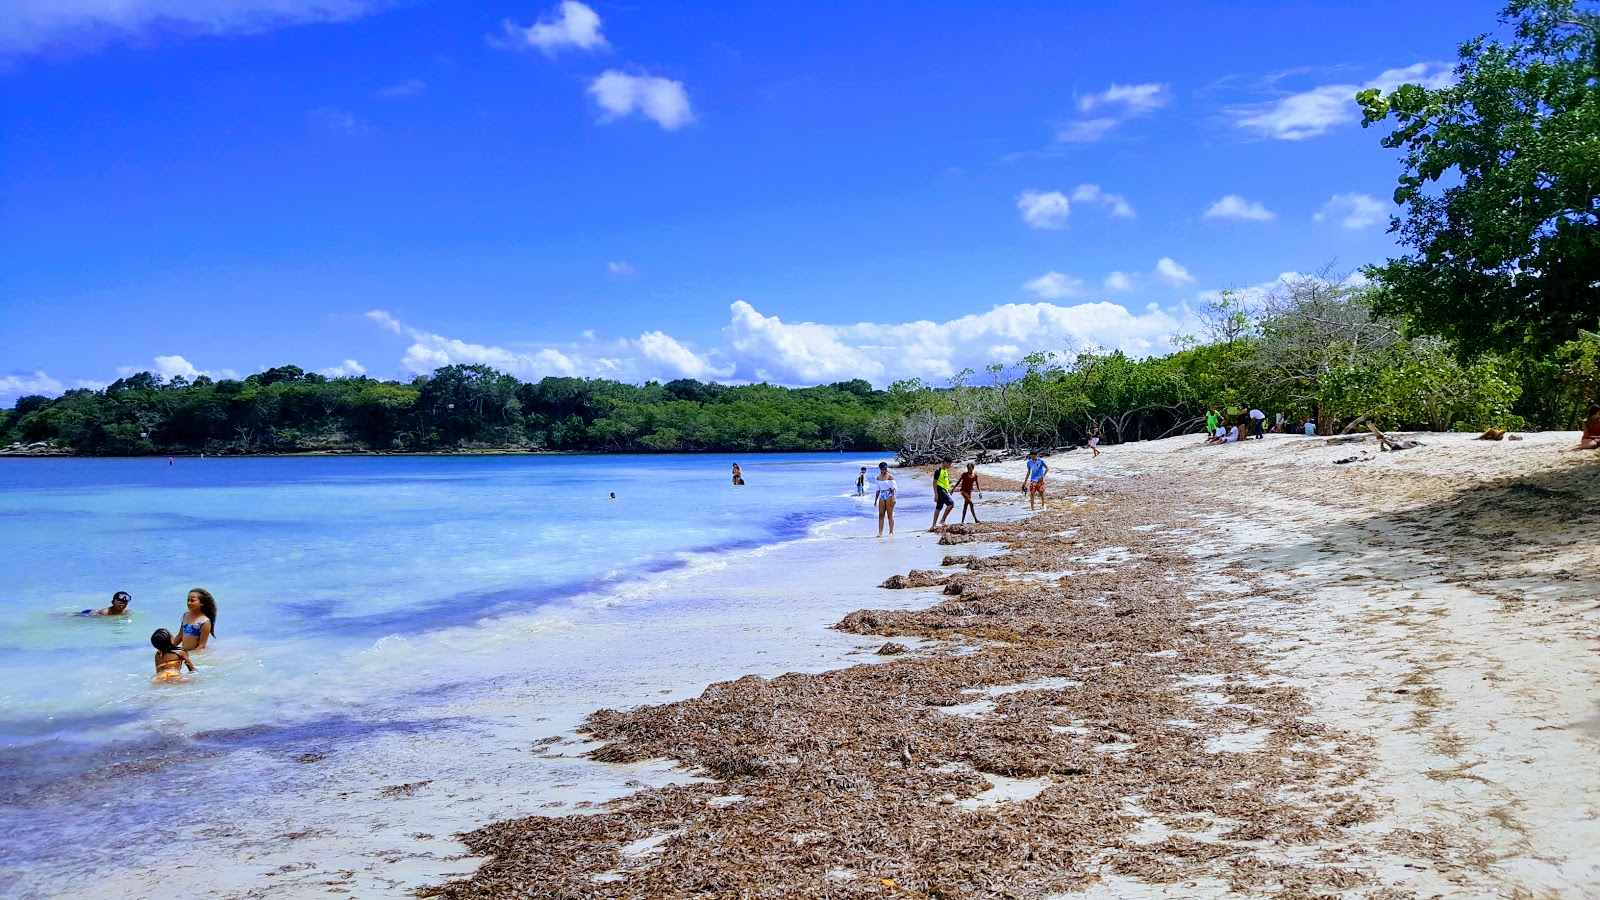 Fotografija Playa Chiquita Luperon nahaja se v naravnem okolju